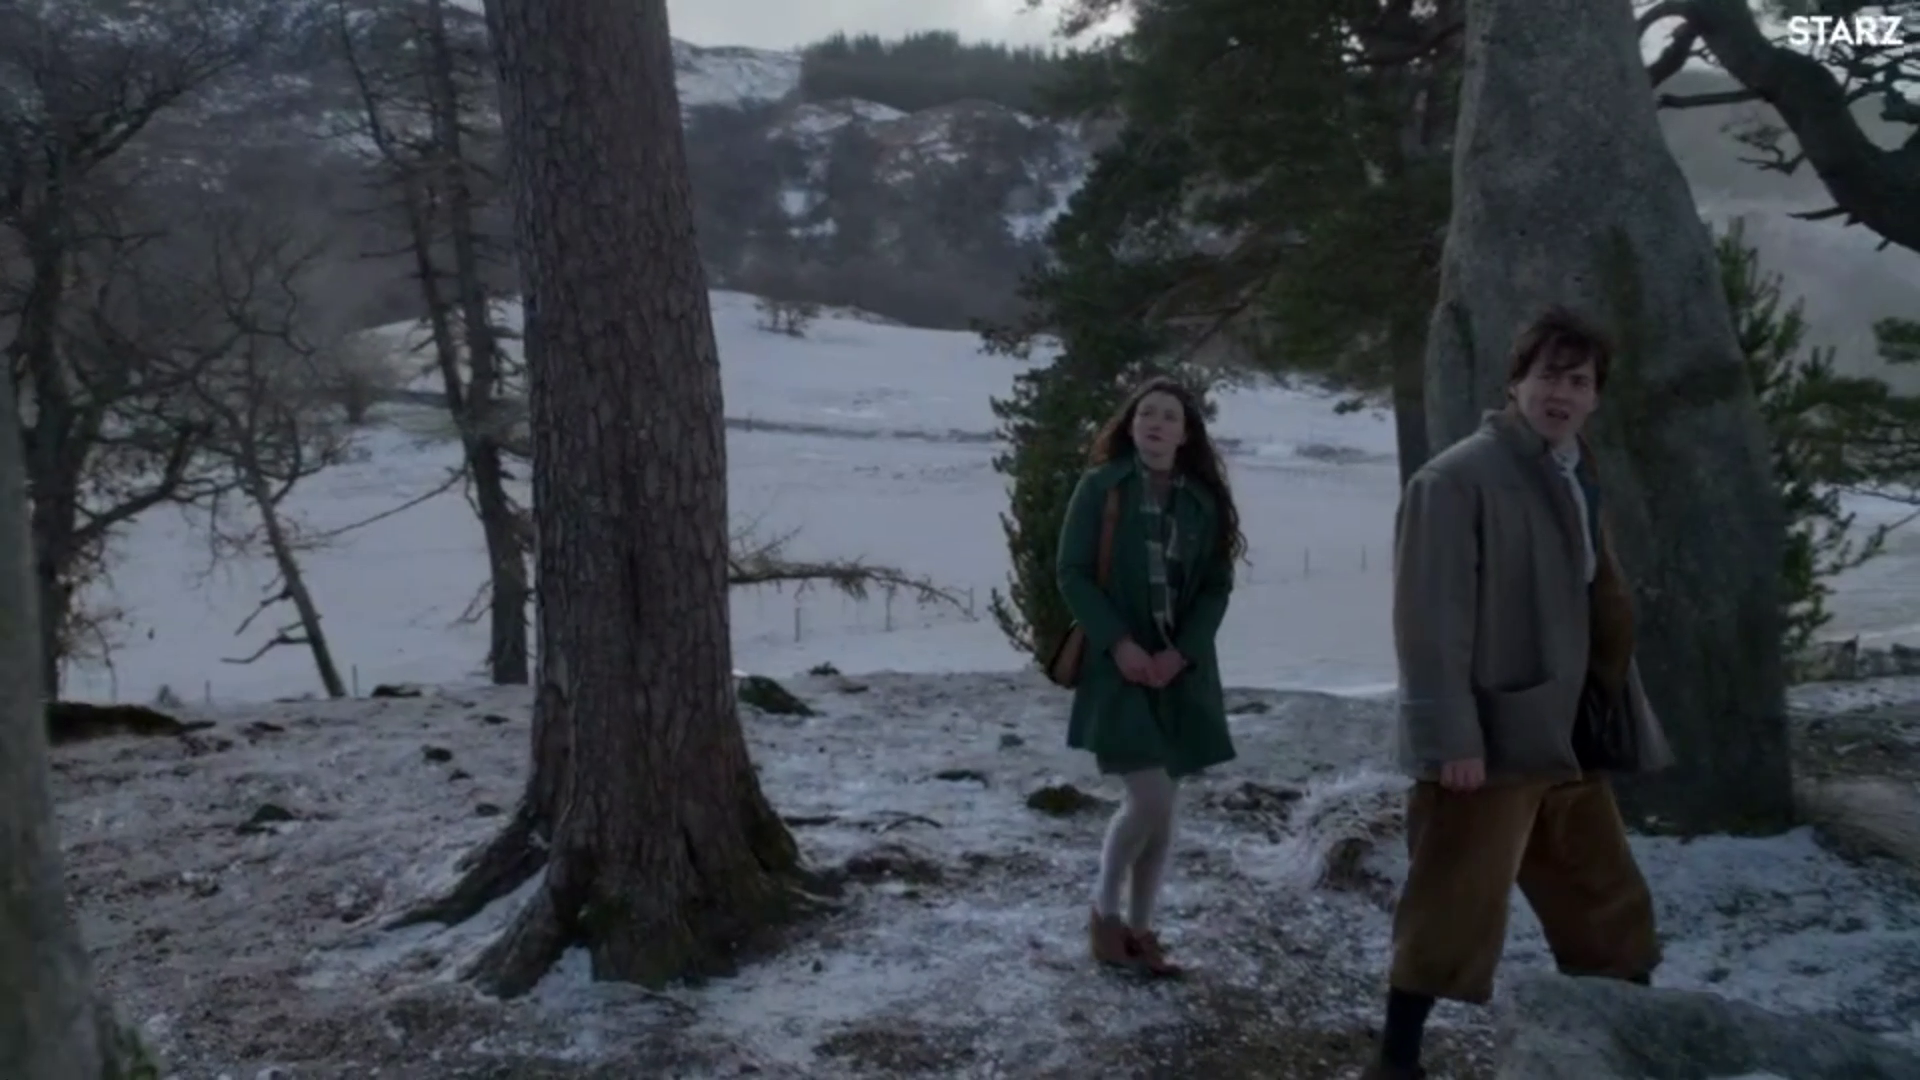 Preview for ‘Outlander’ Episode 407, “Down the Rabbit Hole” | Outlander ...